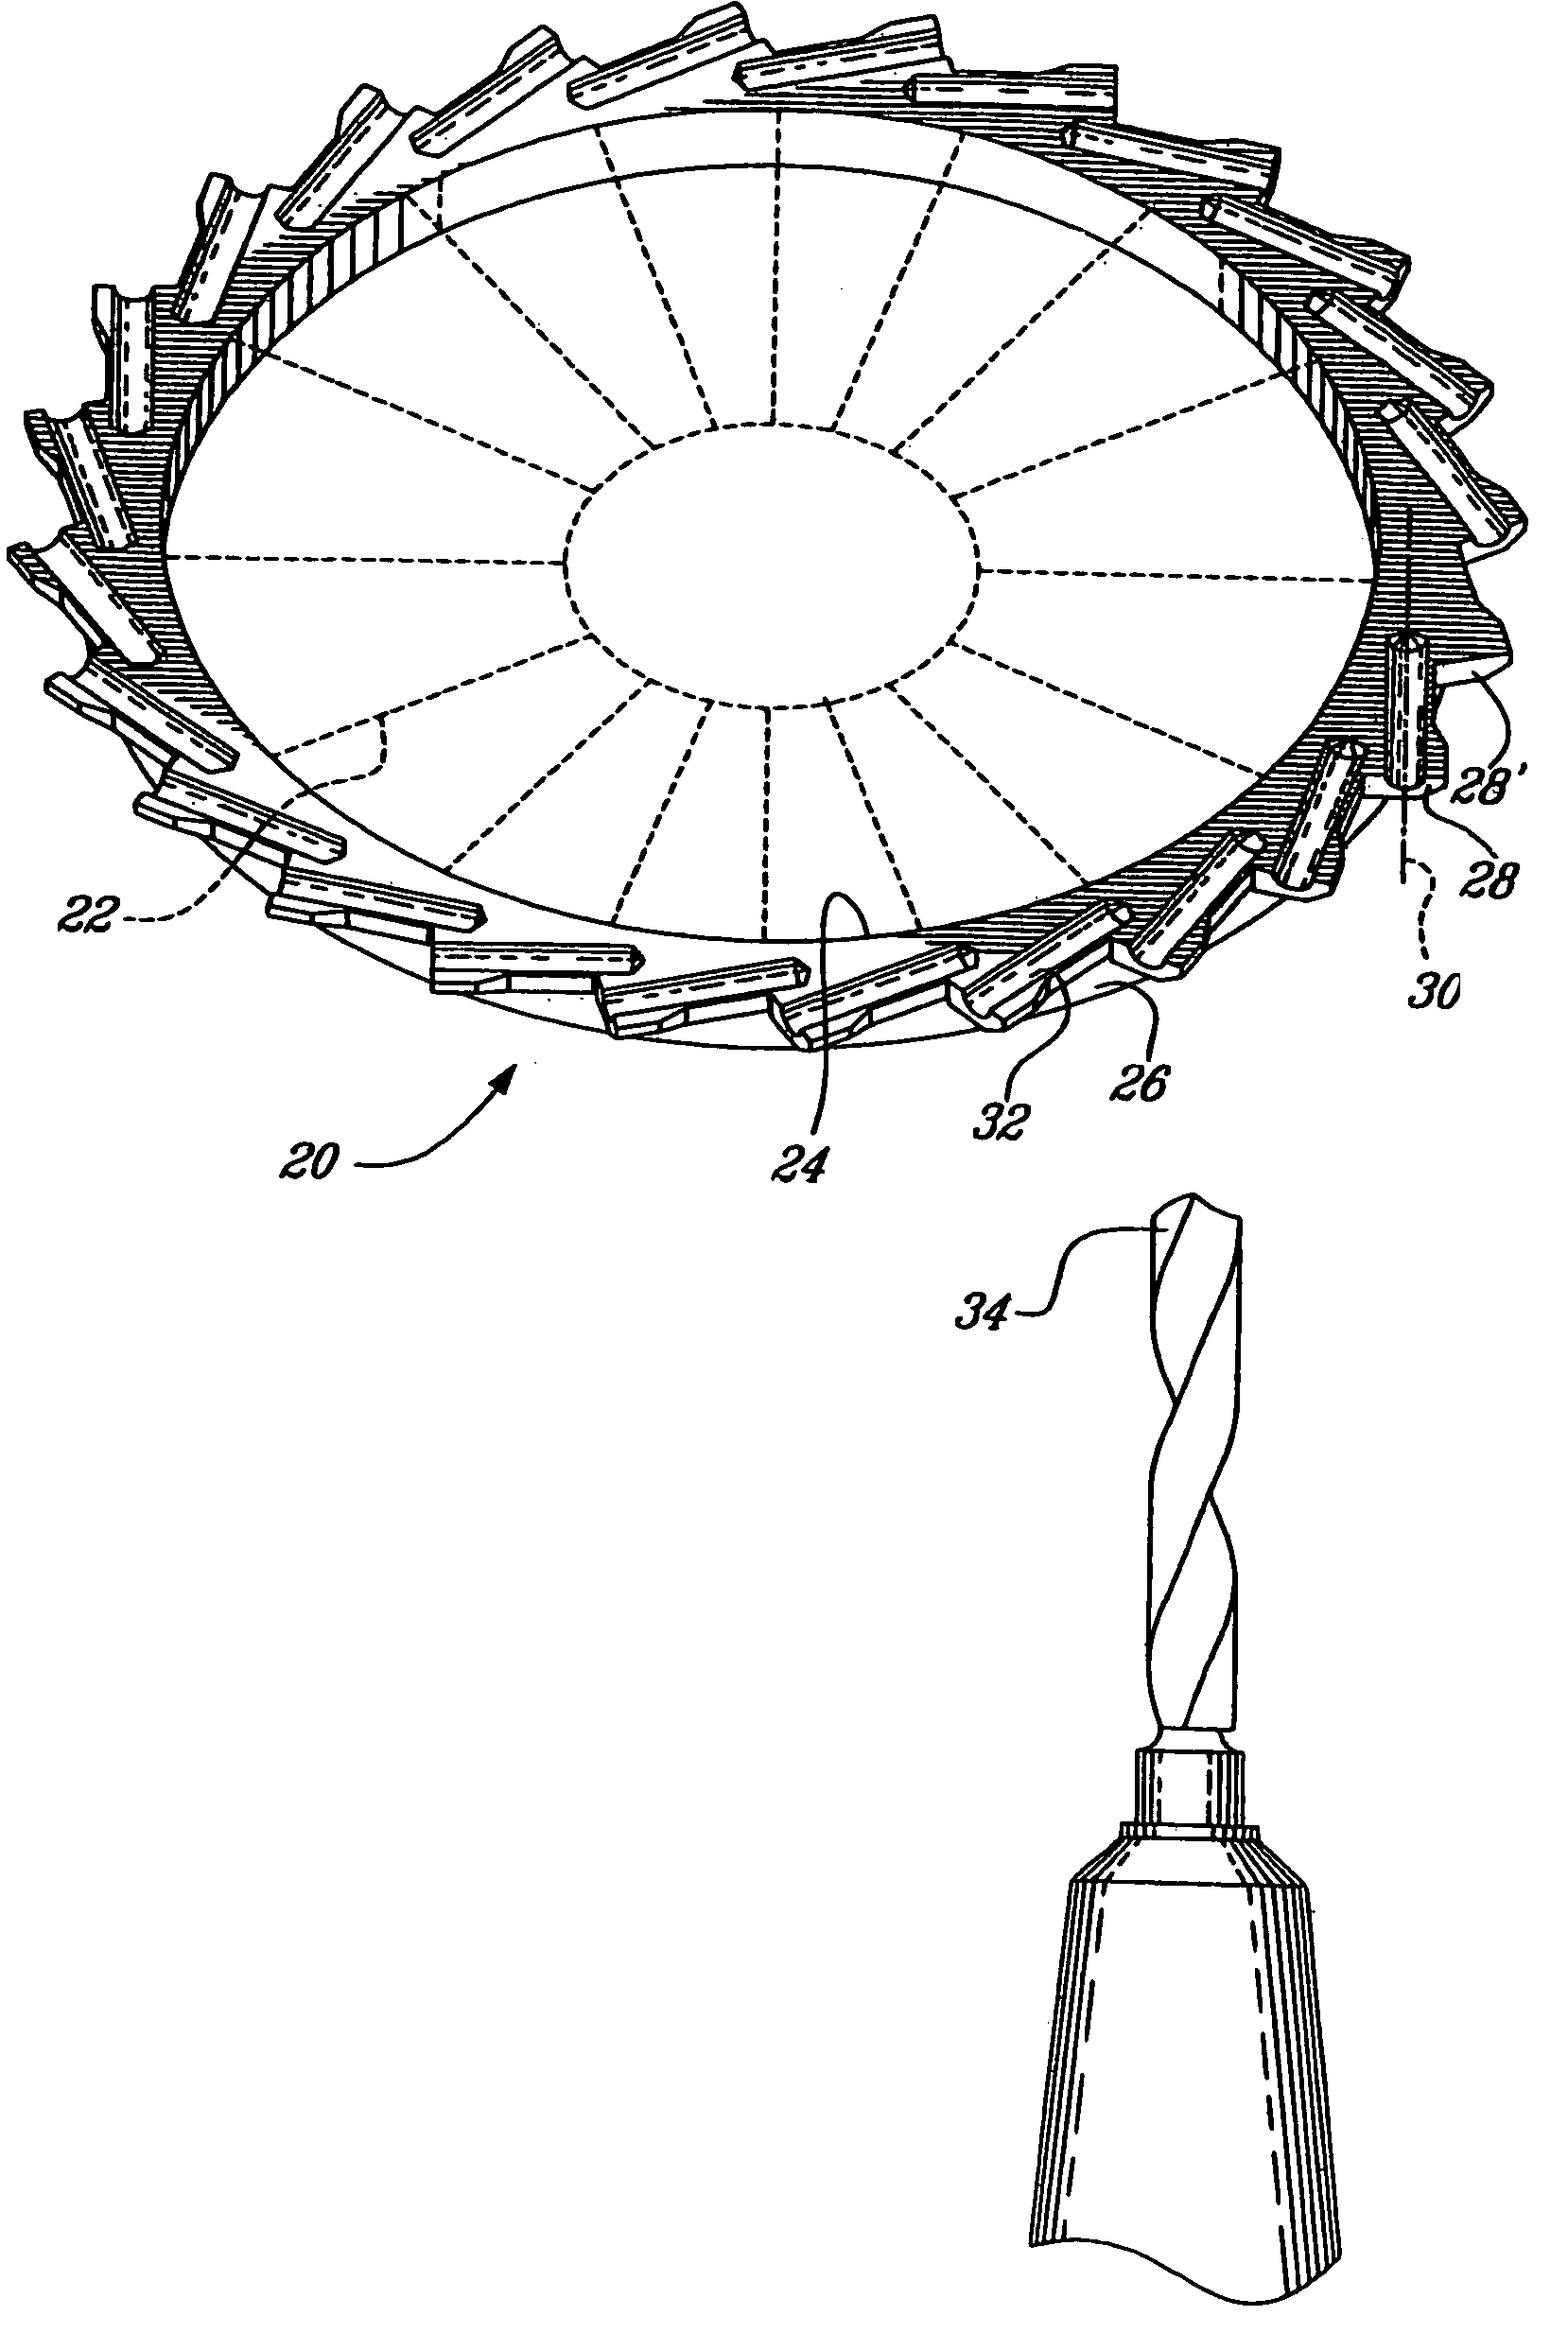 Method of making a gas turbine engine diffuser